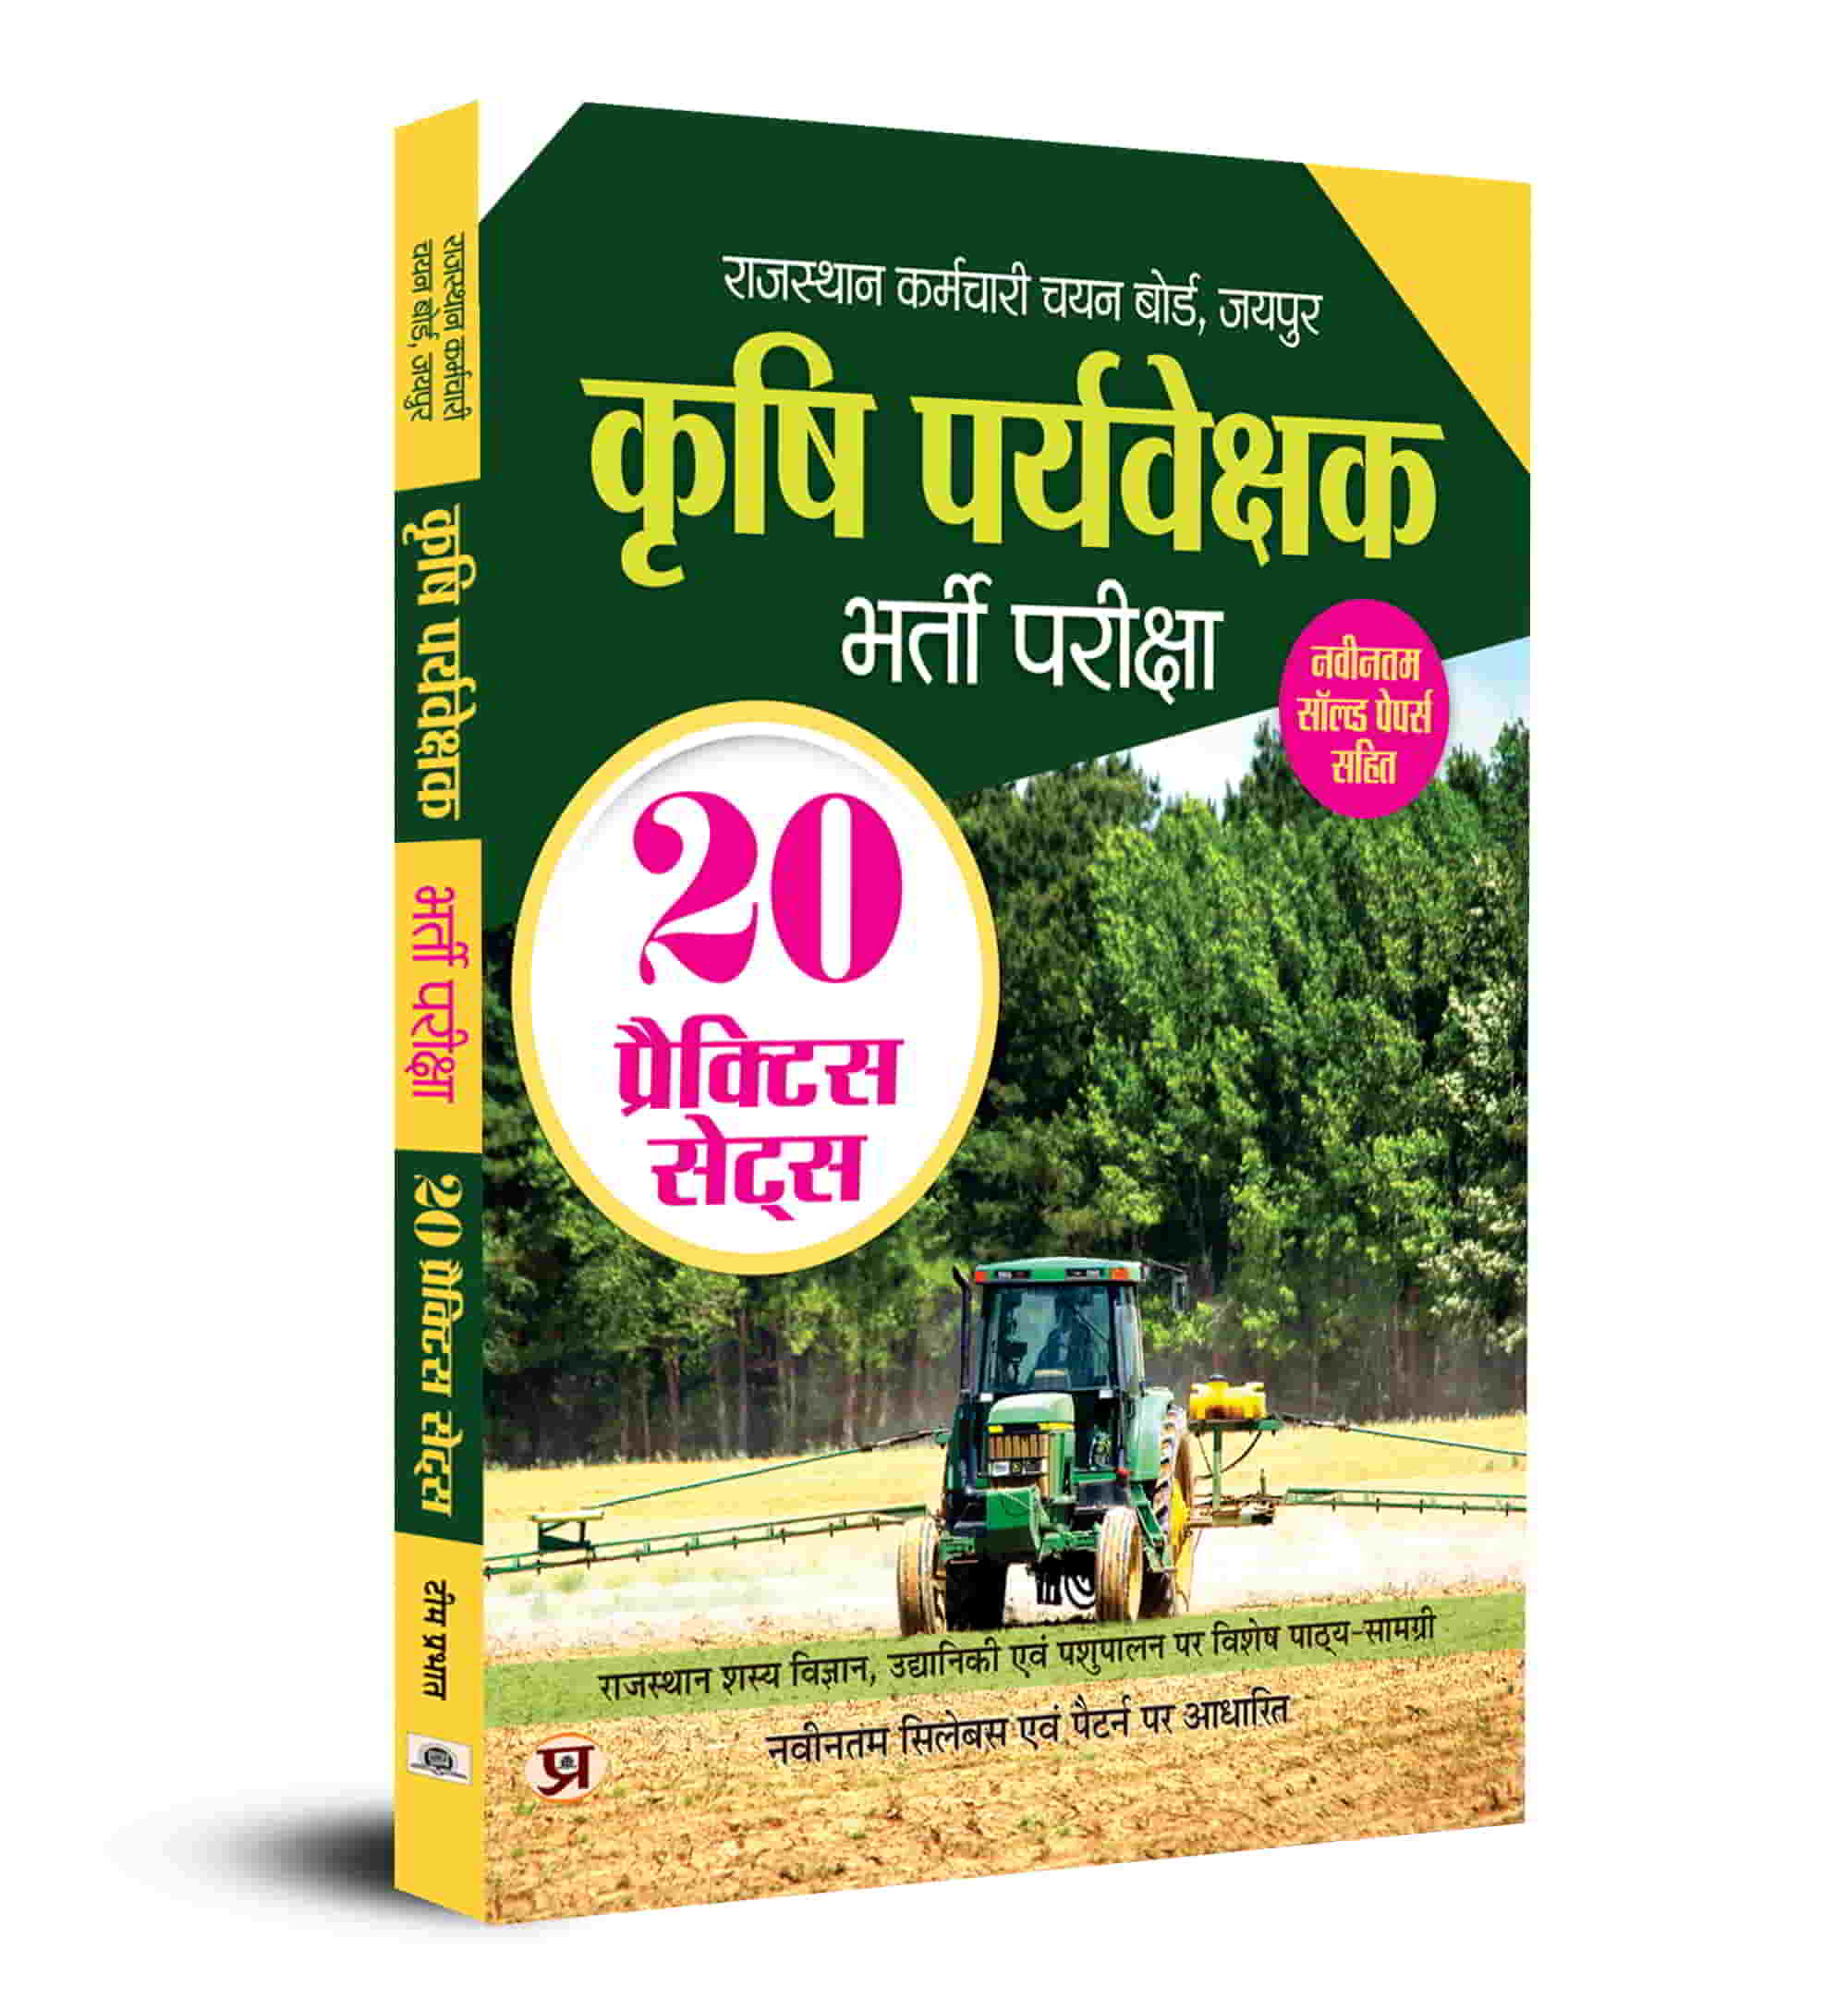 Rajasthan Agriculture Supervisor (कृषि पर्यवेक्षक) Krishi Paryavekshak Recruitment Exam Book With 20 Practice Sets Book In Hindi